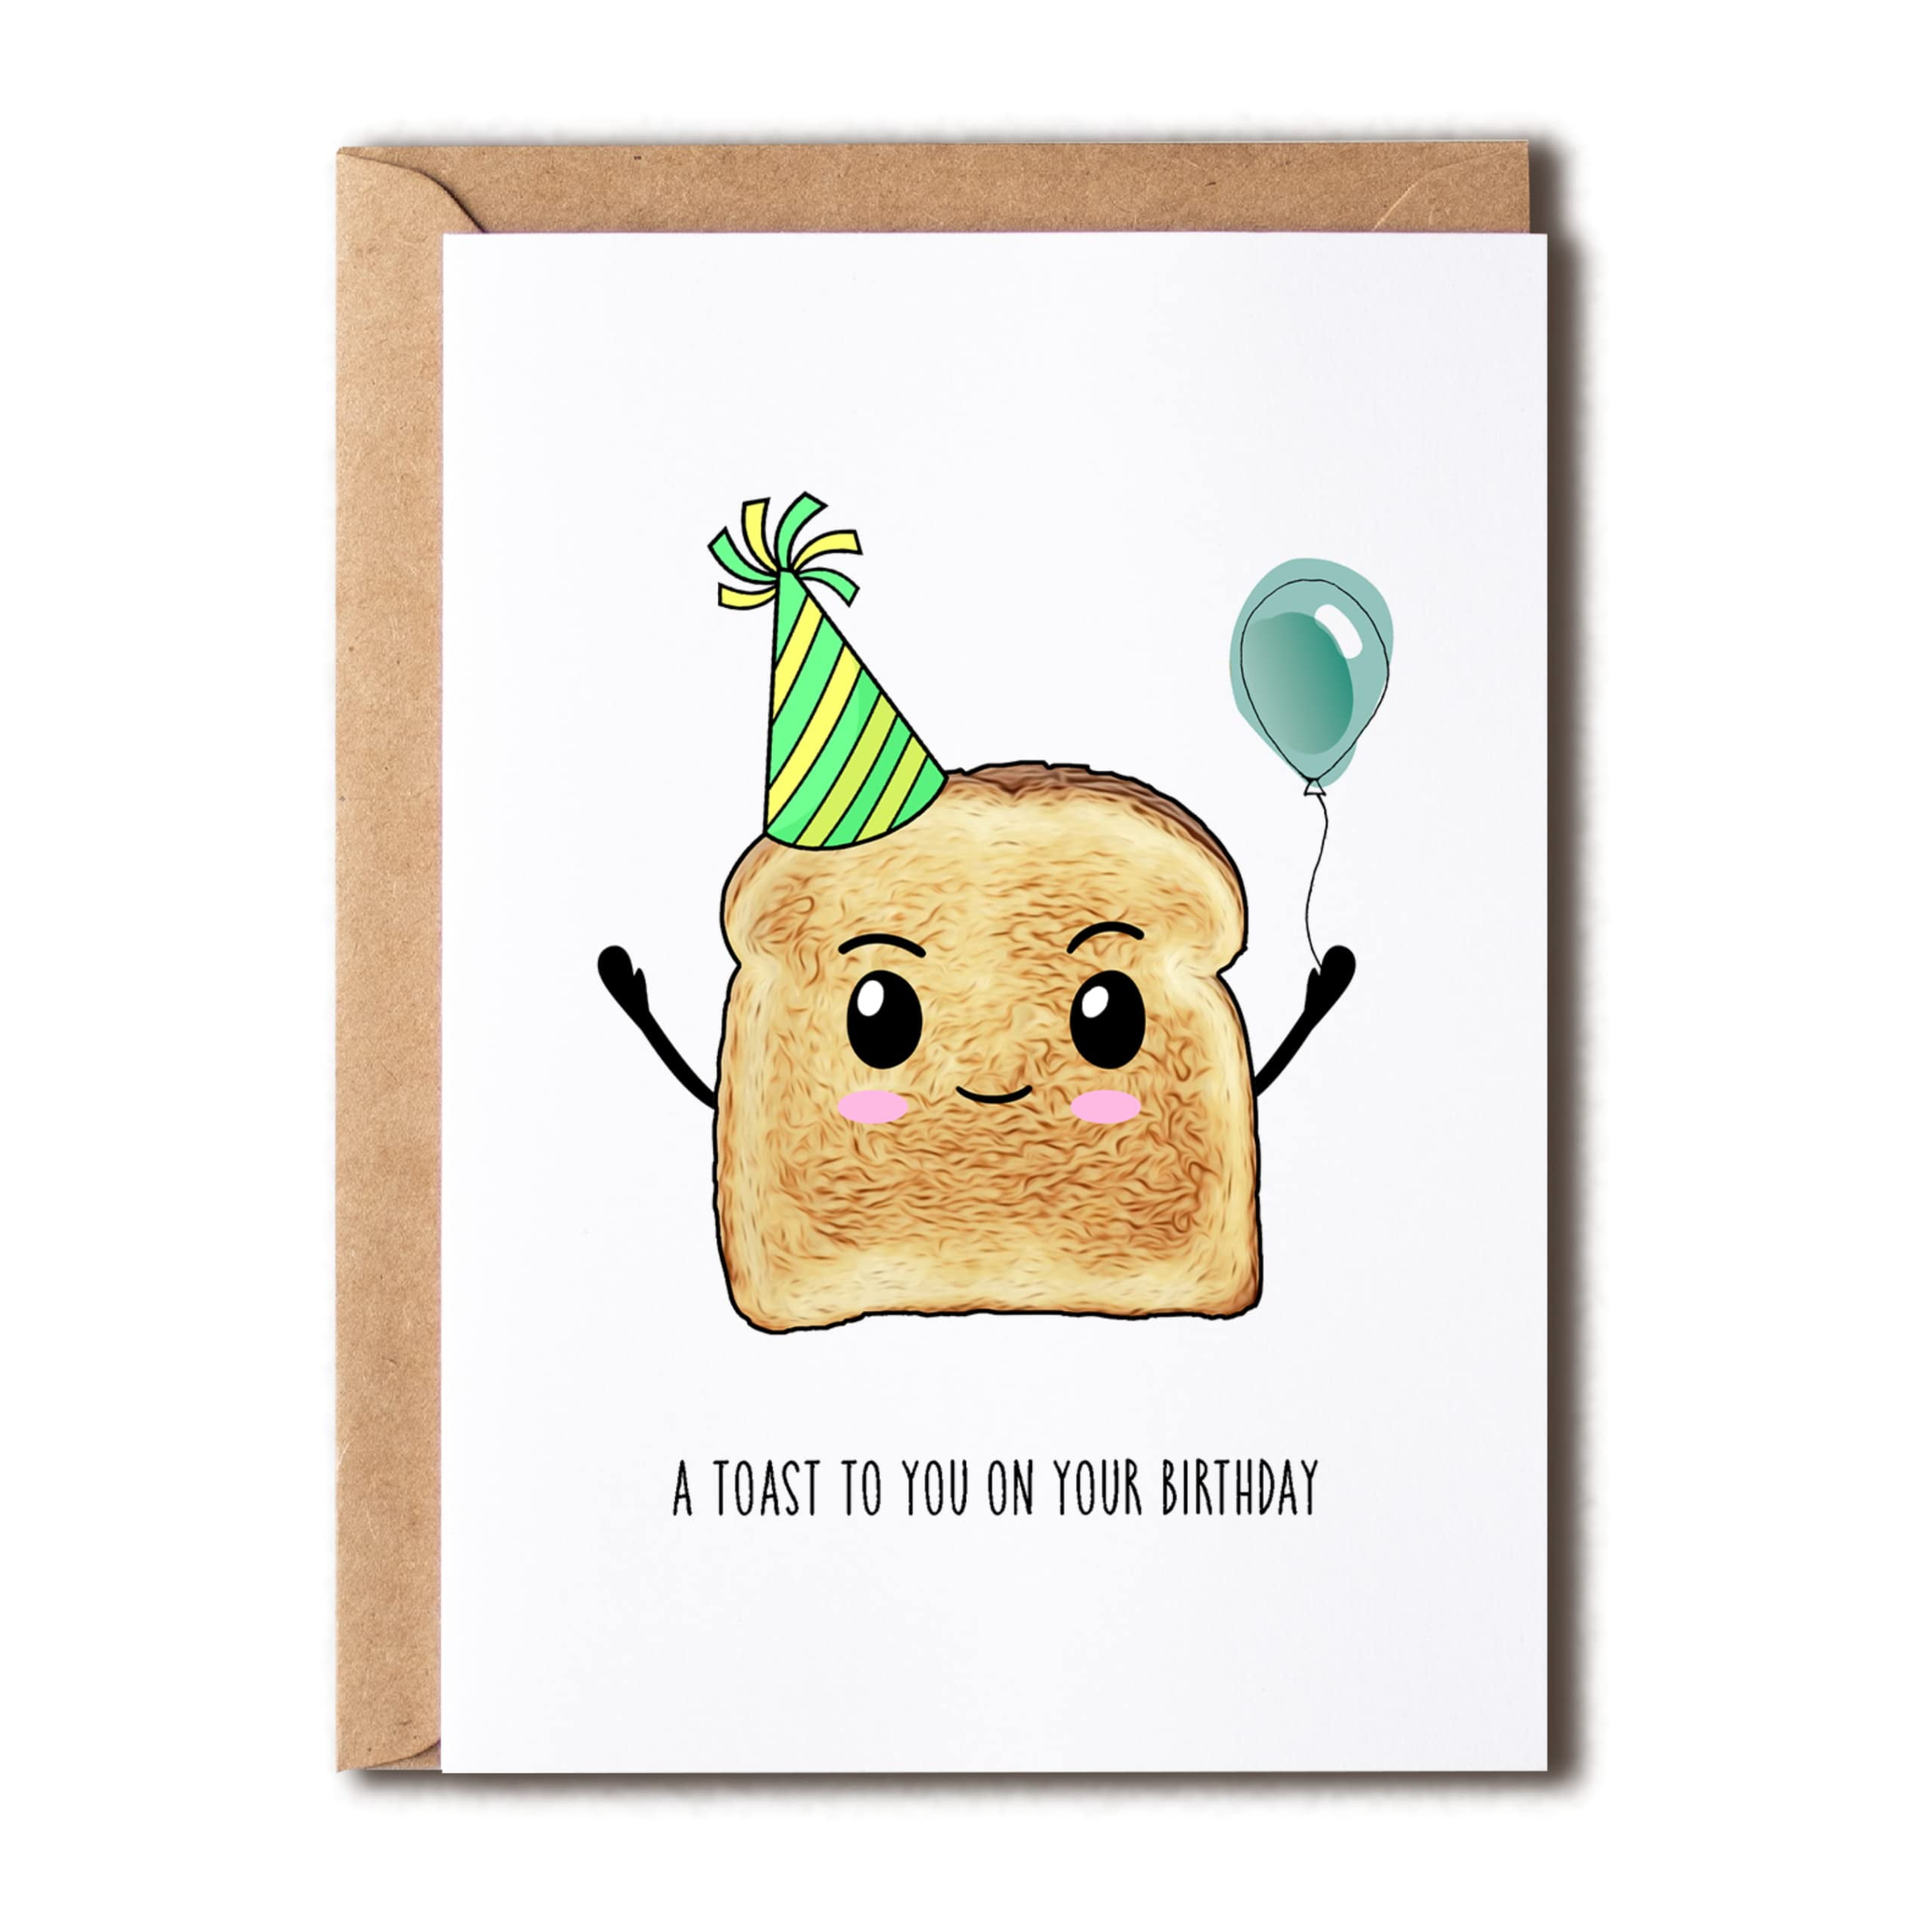 KrysDesigns Funny Birthday Card - A Toast To You On Your Birthday Card - Funny  Pun Birthday Card, 5 x 7 inches 